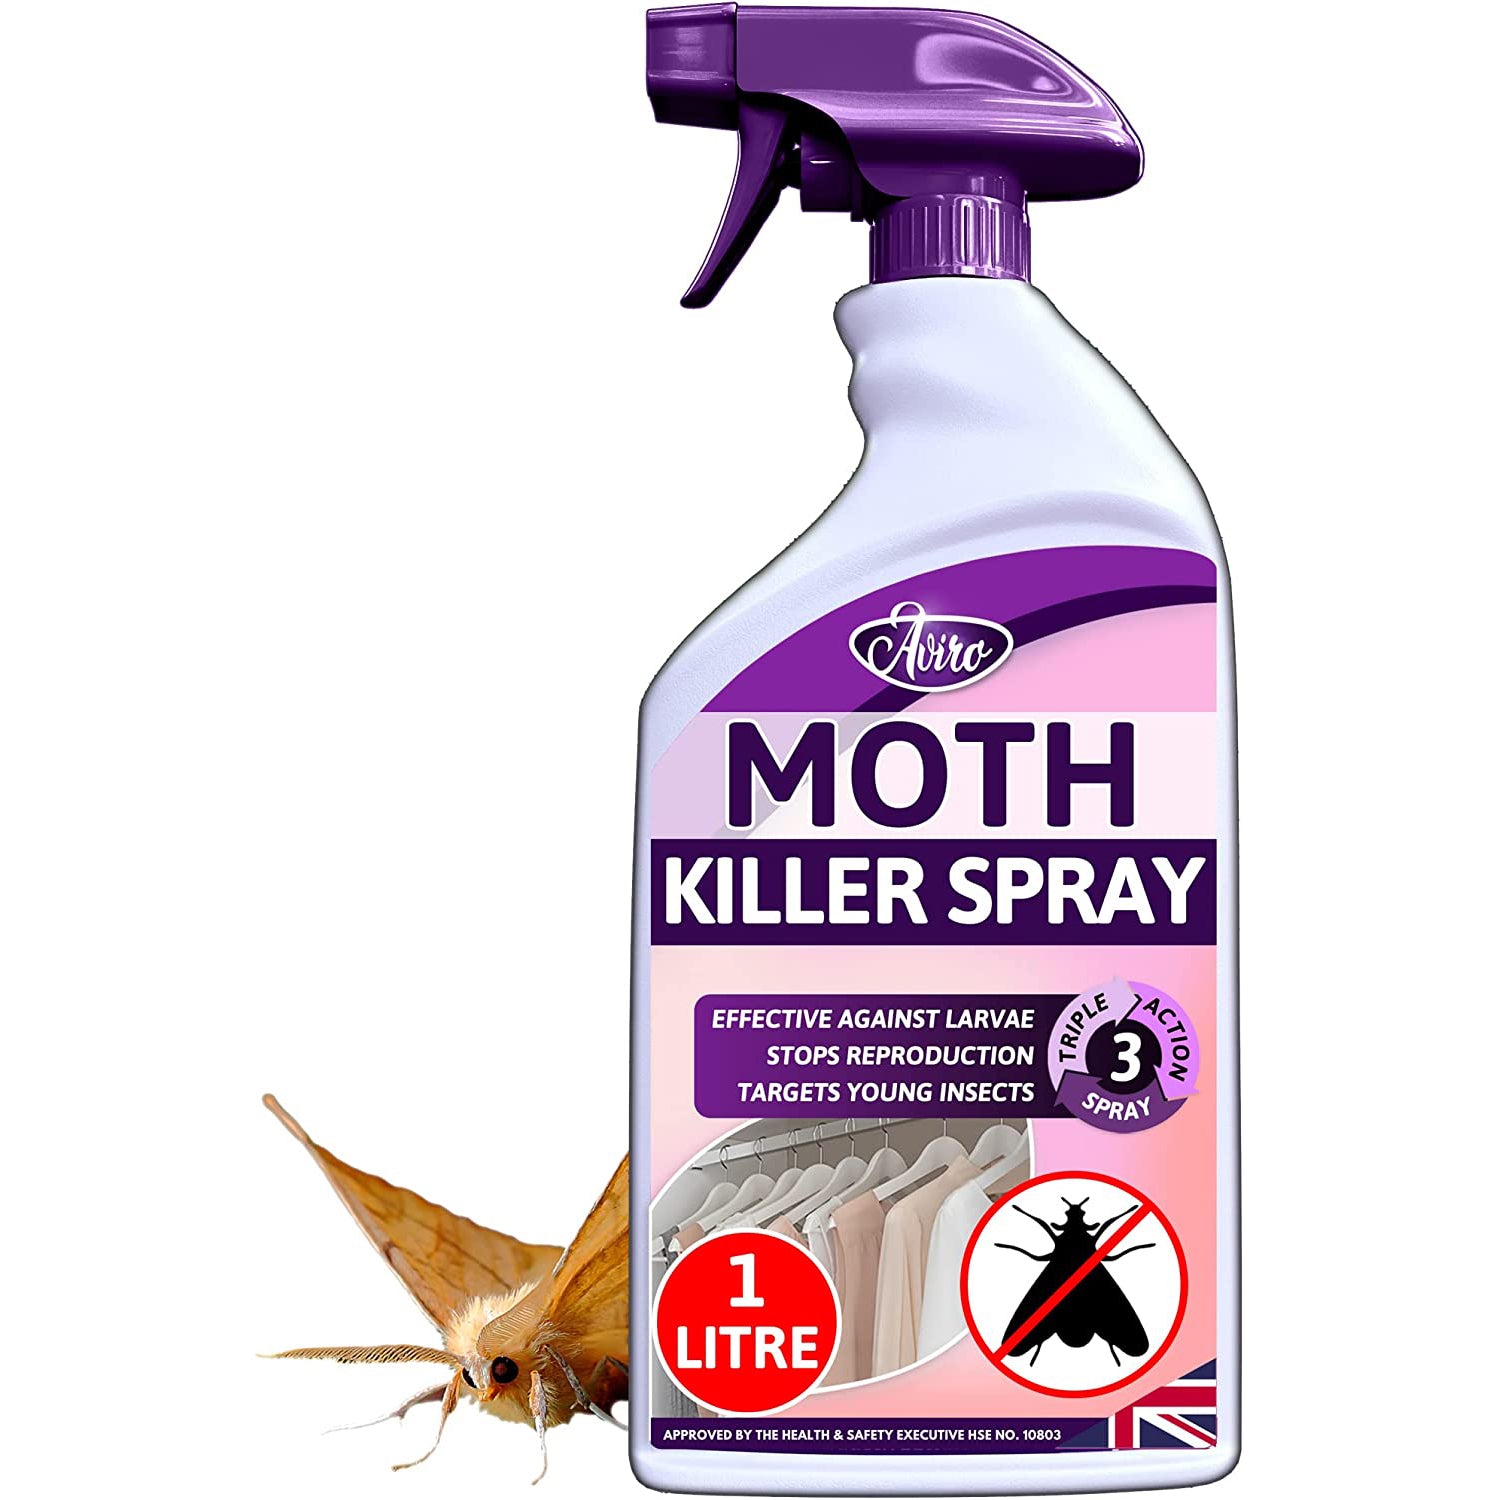 ViroPest Complete Moth Killer Kit - 1x Protector C Super Moth